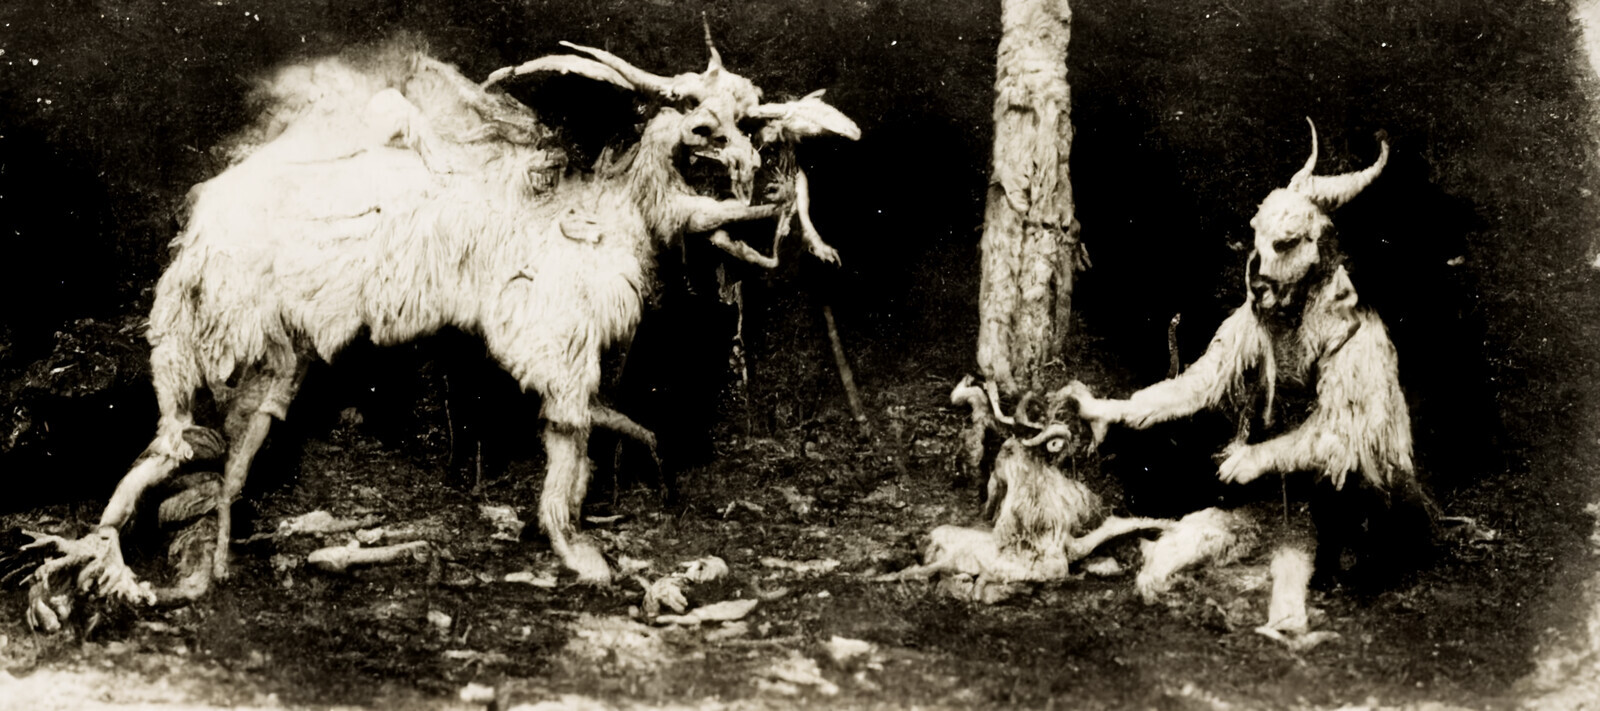 Communion with the Wild
c. 1881
Photograph
'Calls himself Elder Agrios'